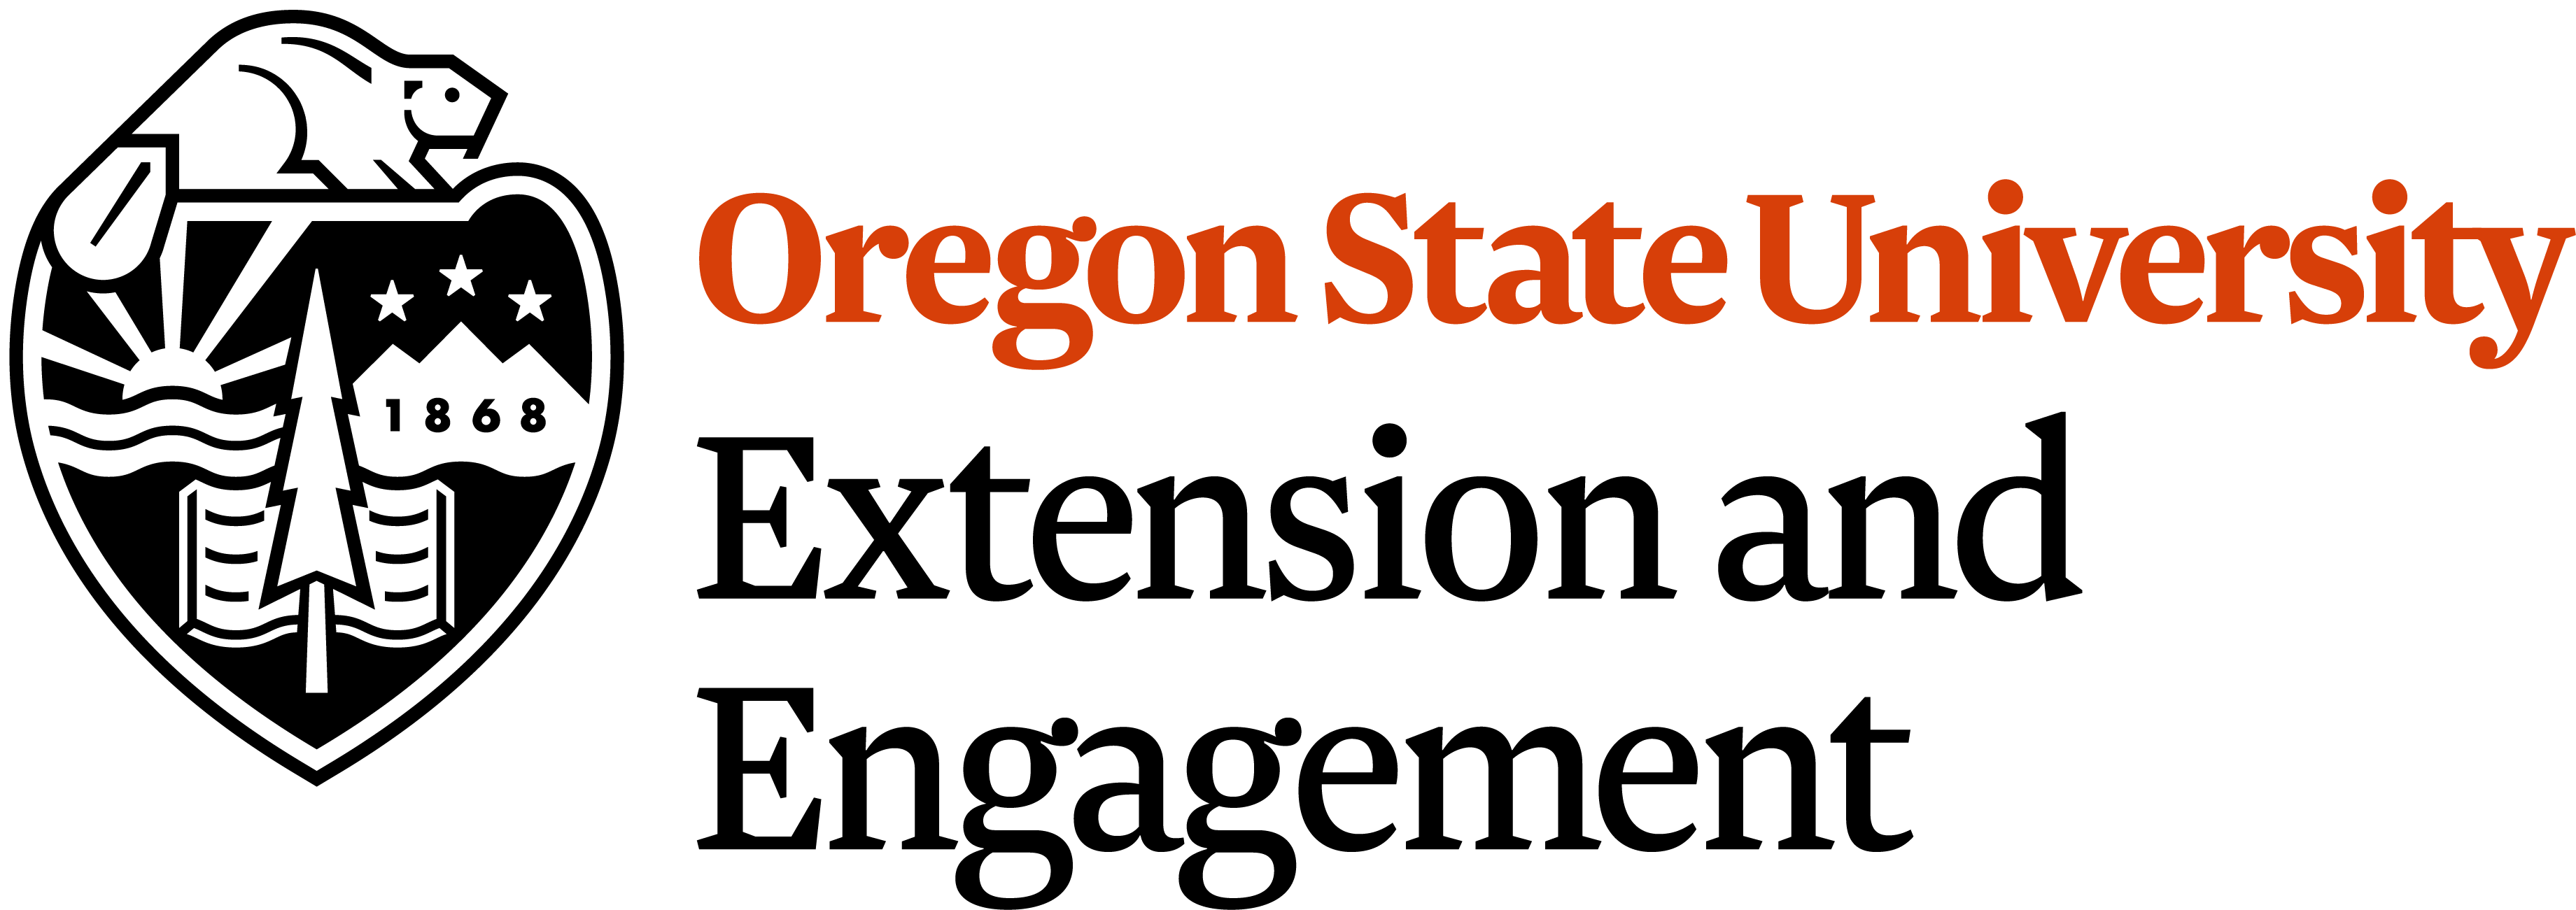 Oregon State University Seeks Assistant Professor of Practice